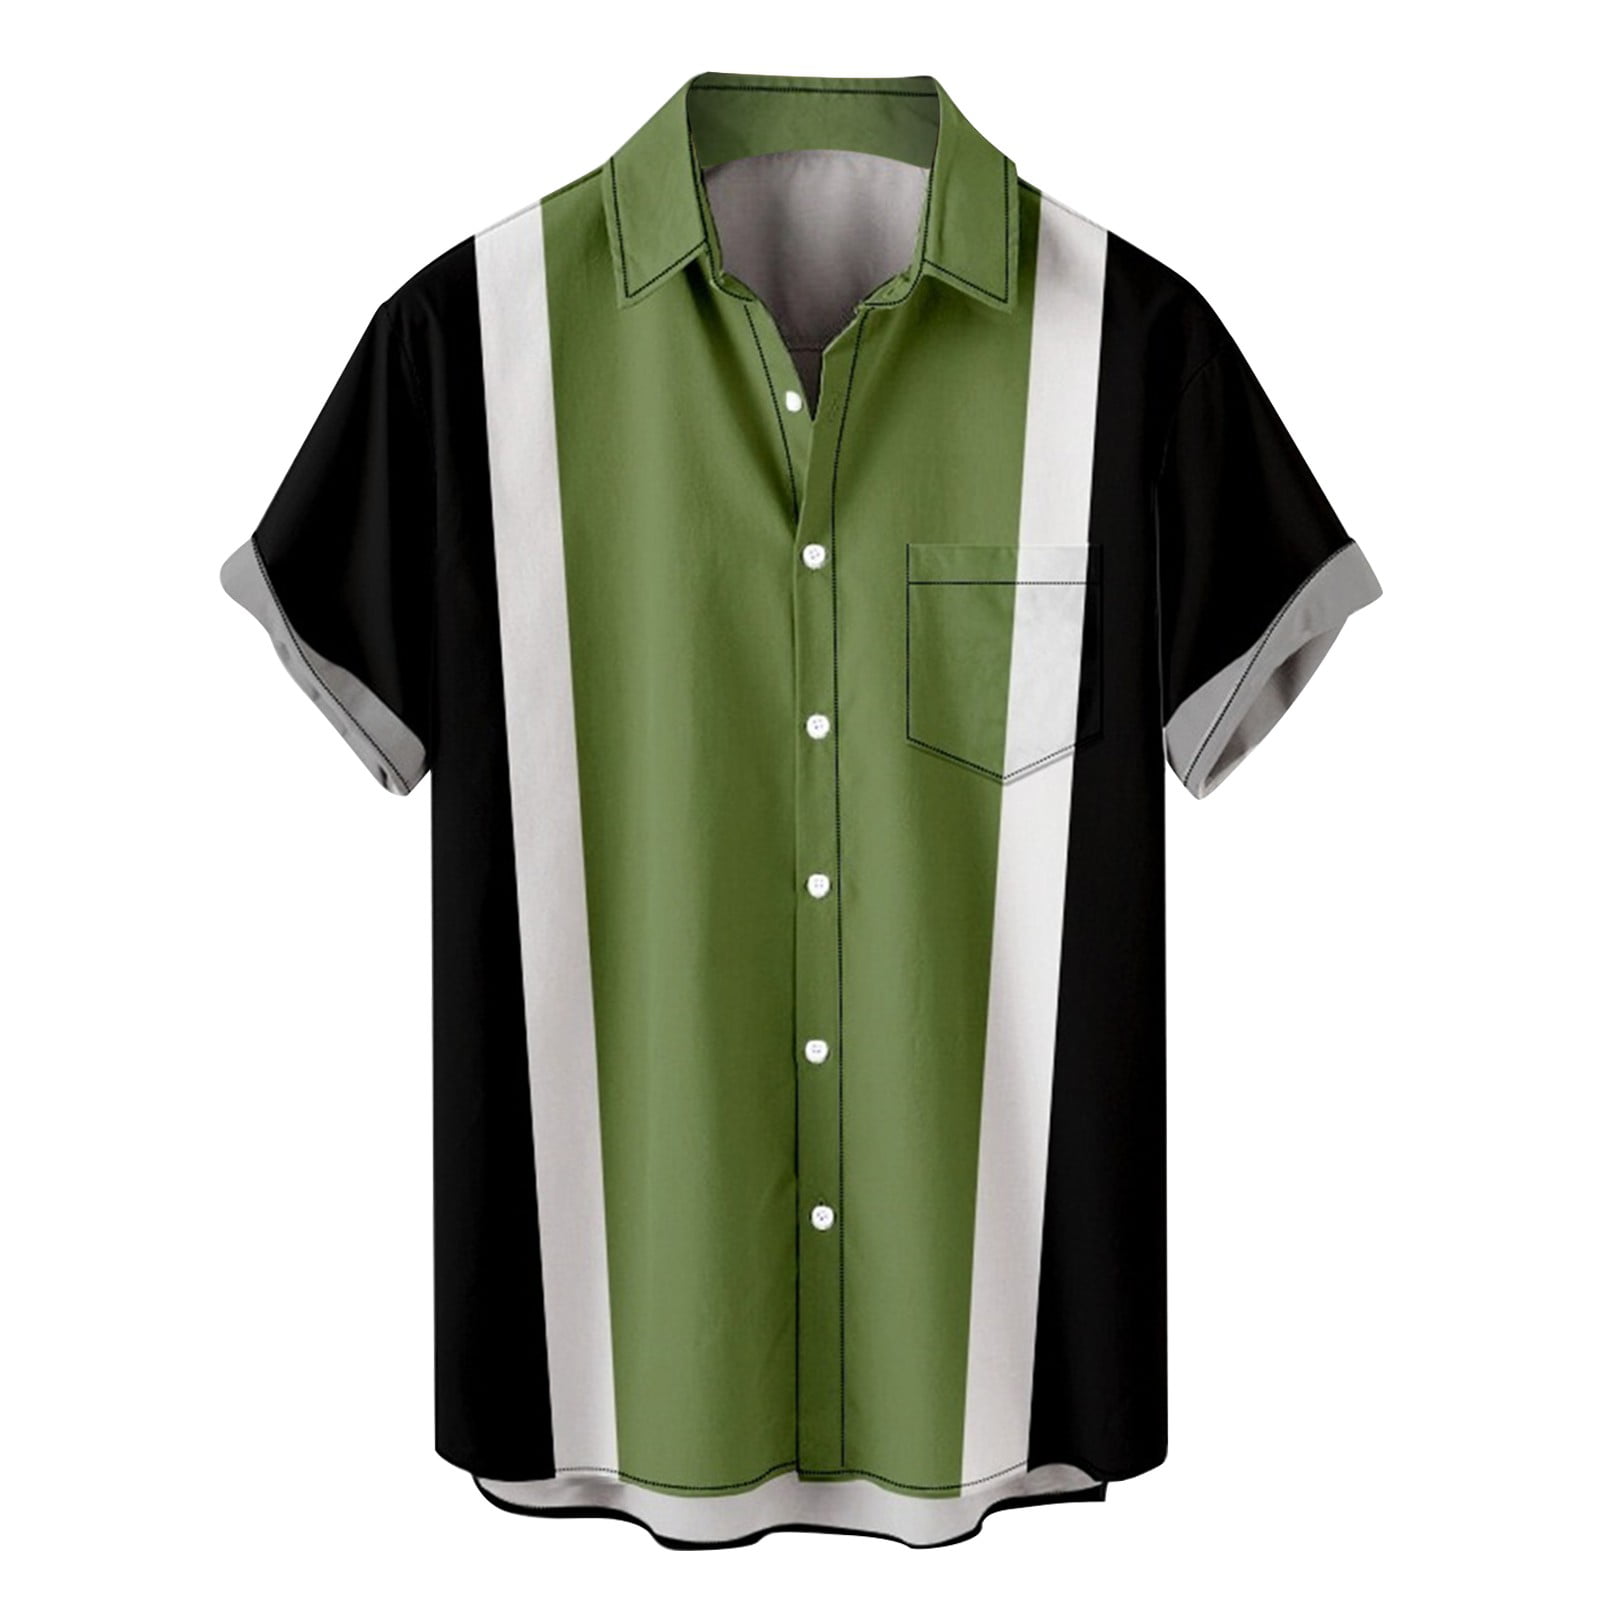 NECHOLOGY Men's Casual Button-Down Shirts Van Heusen Dress